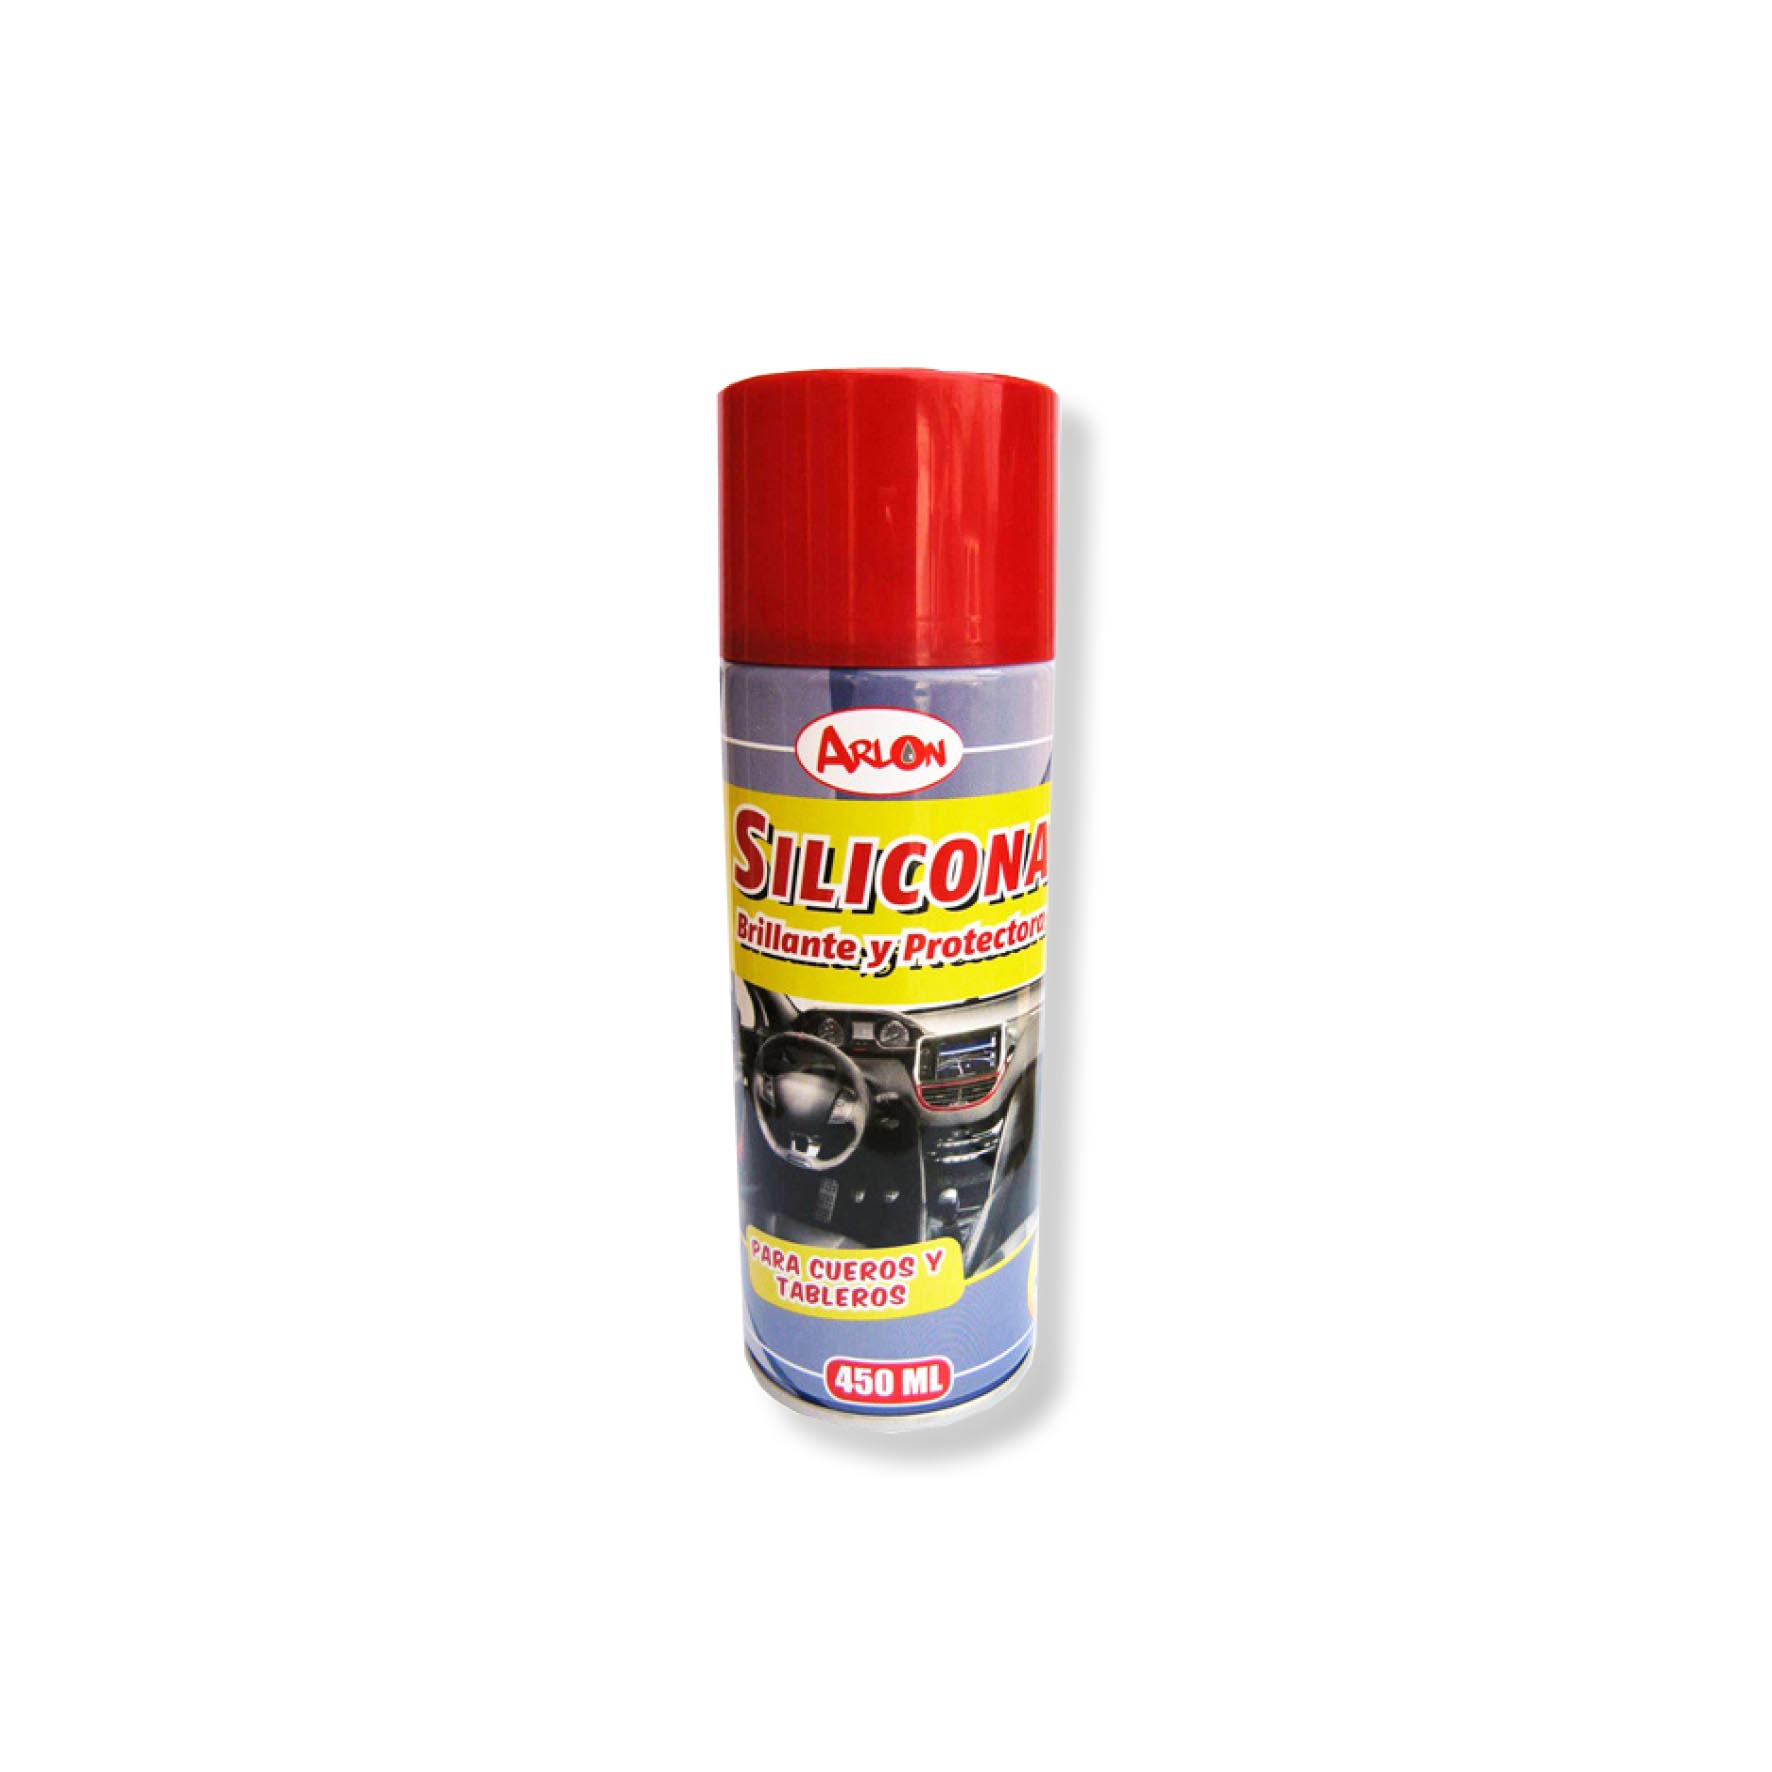 Silicona para Cueros y Tableros Aroma Fresa 450ml - Knauf